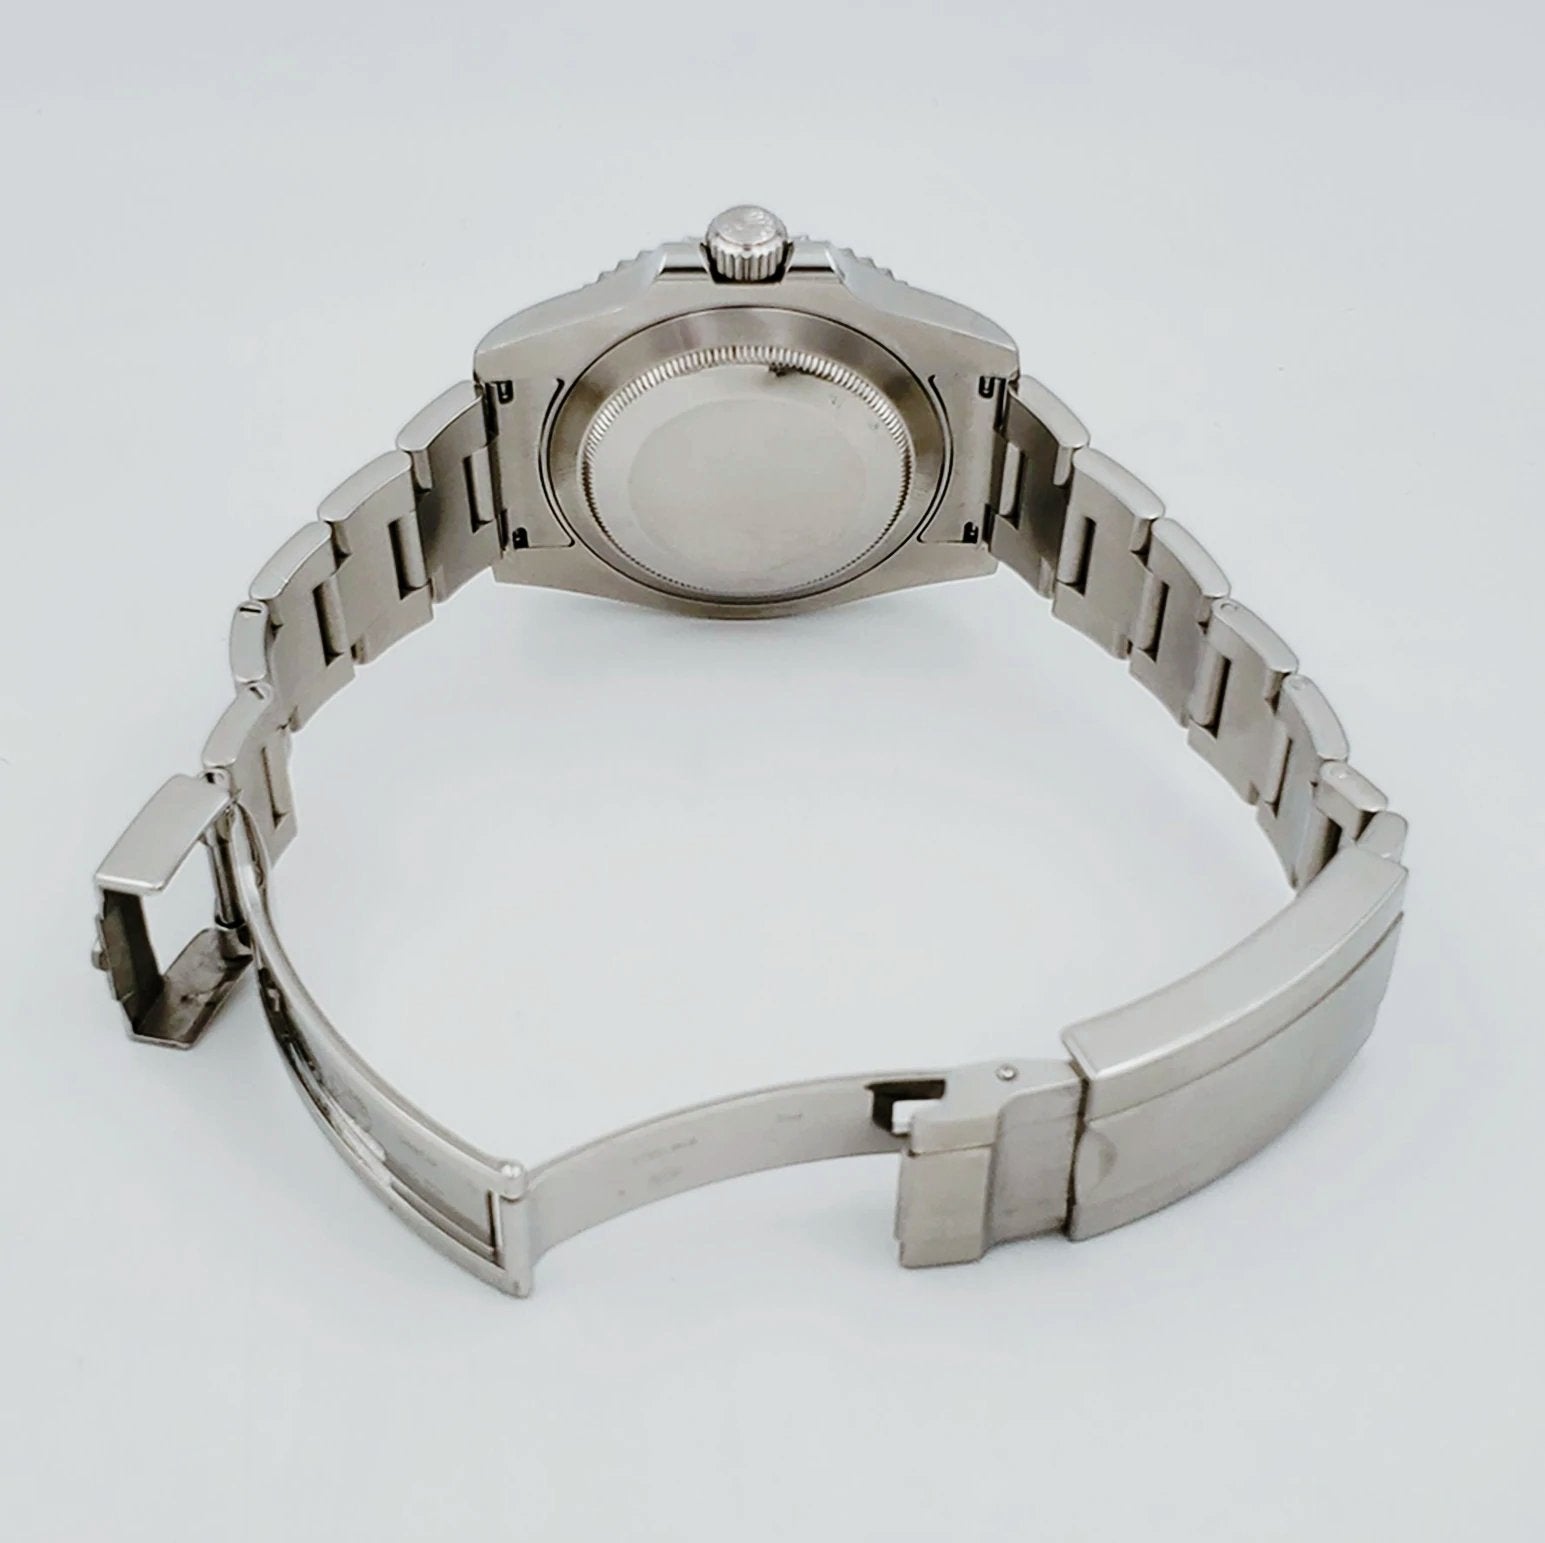 Rolex Submariner Date 116610LV 40mm Green Dial Stainless Steel Bracelet